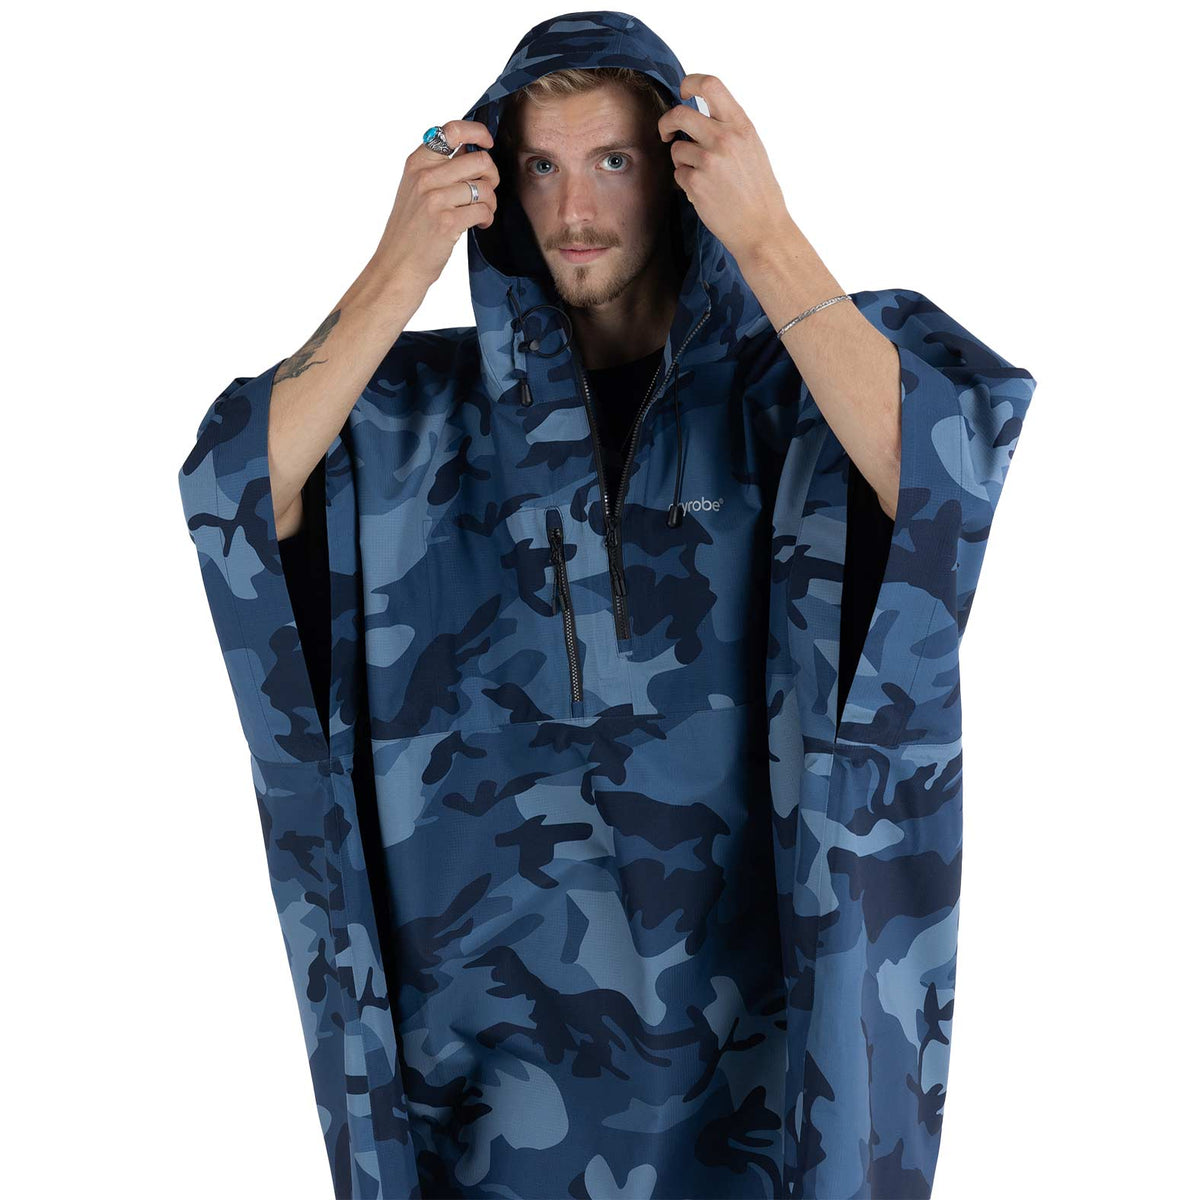 Dryrobe Waterproof Poncho - Blue Camo - Changing Robe Poncho Towel by Dryrobe One Size